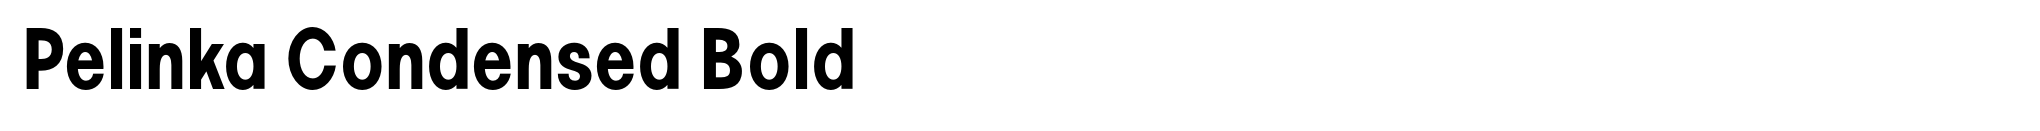 Pelinka Condensed Bold image